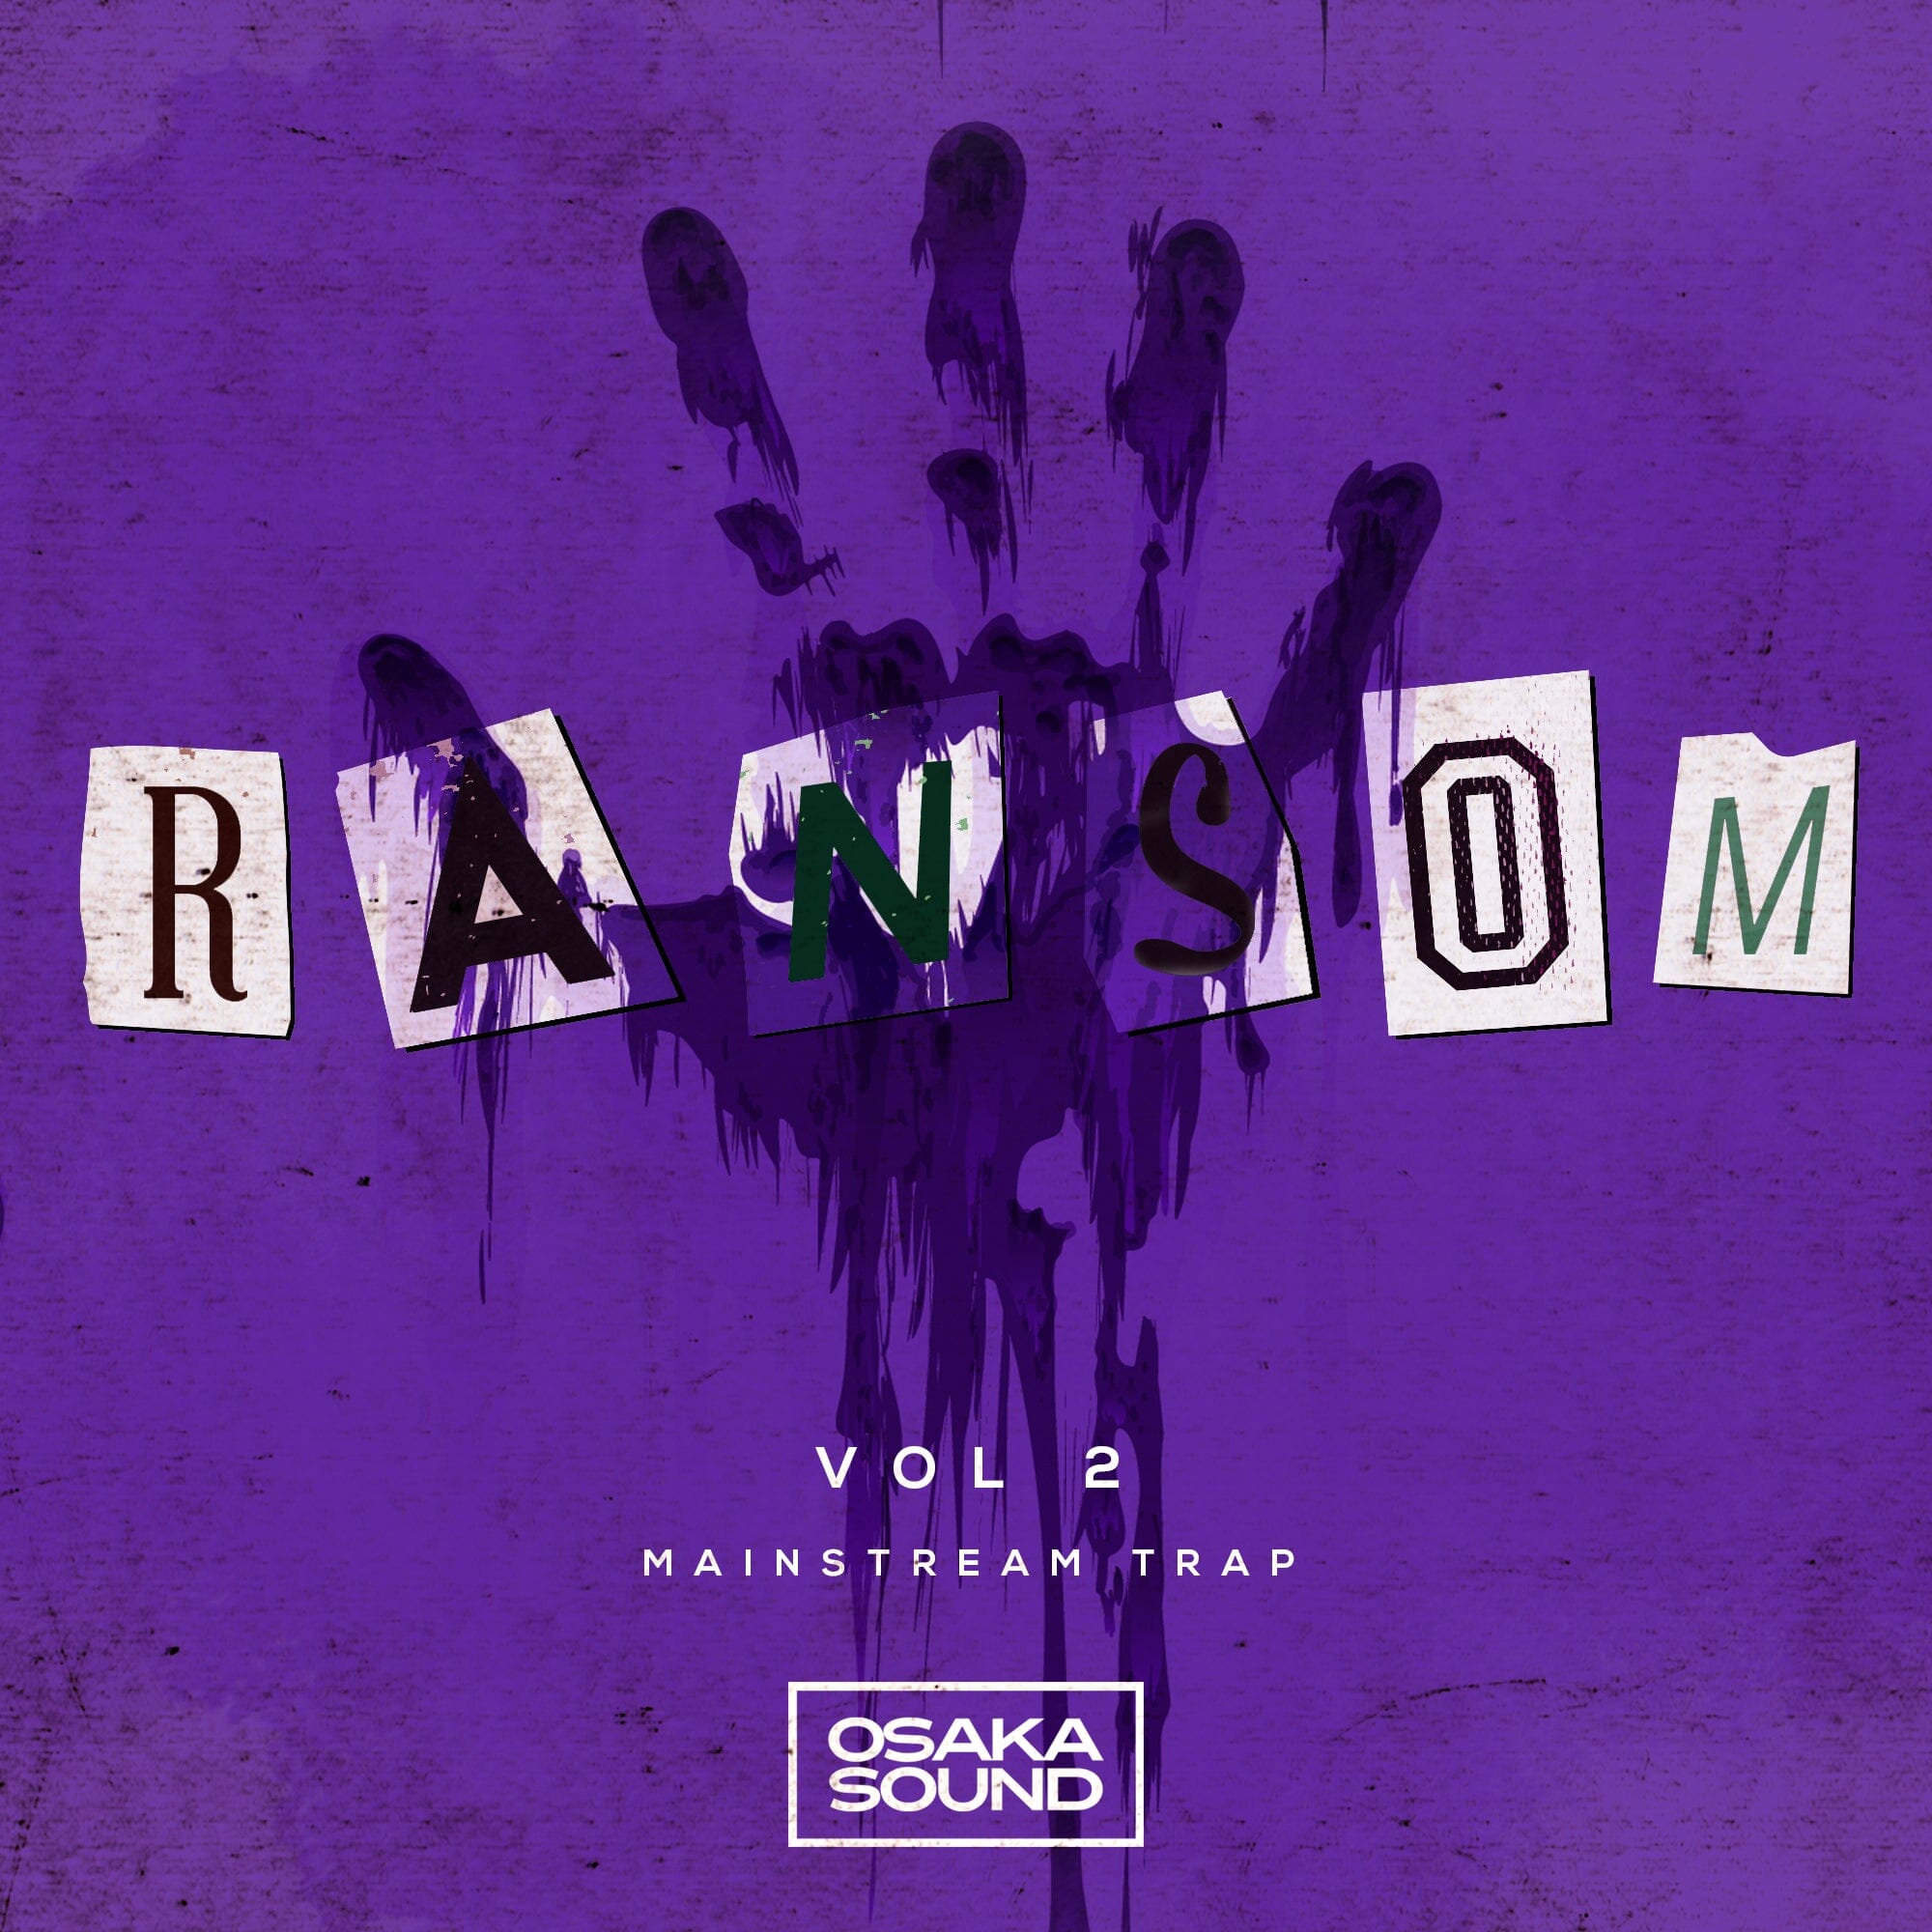 Ransom vol 2 - Mainstream Trap (Drum Loops - 808 Loops - FX) Sample Pack Osaka Sound